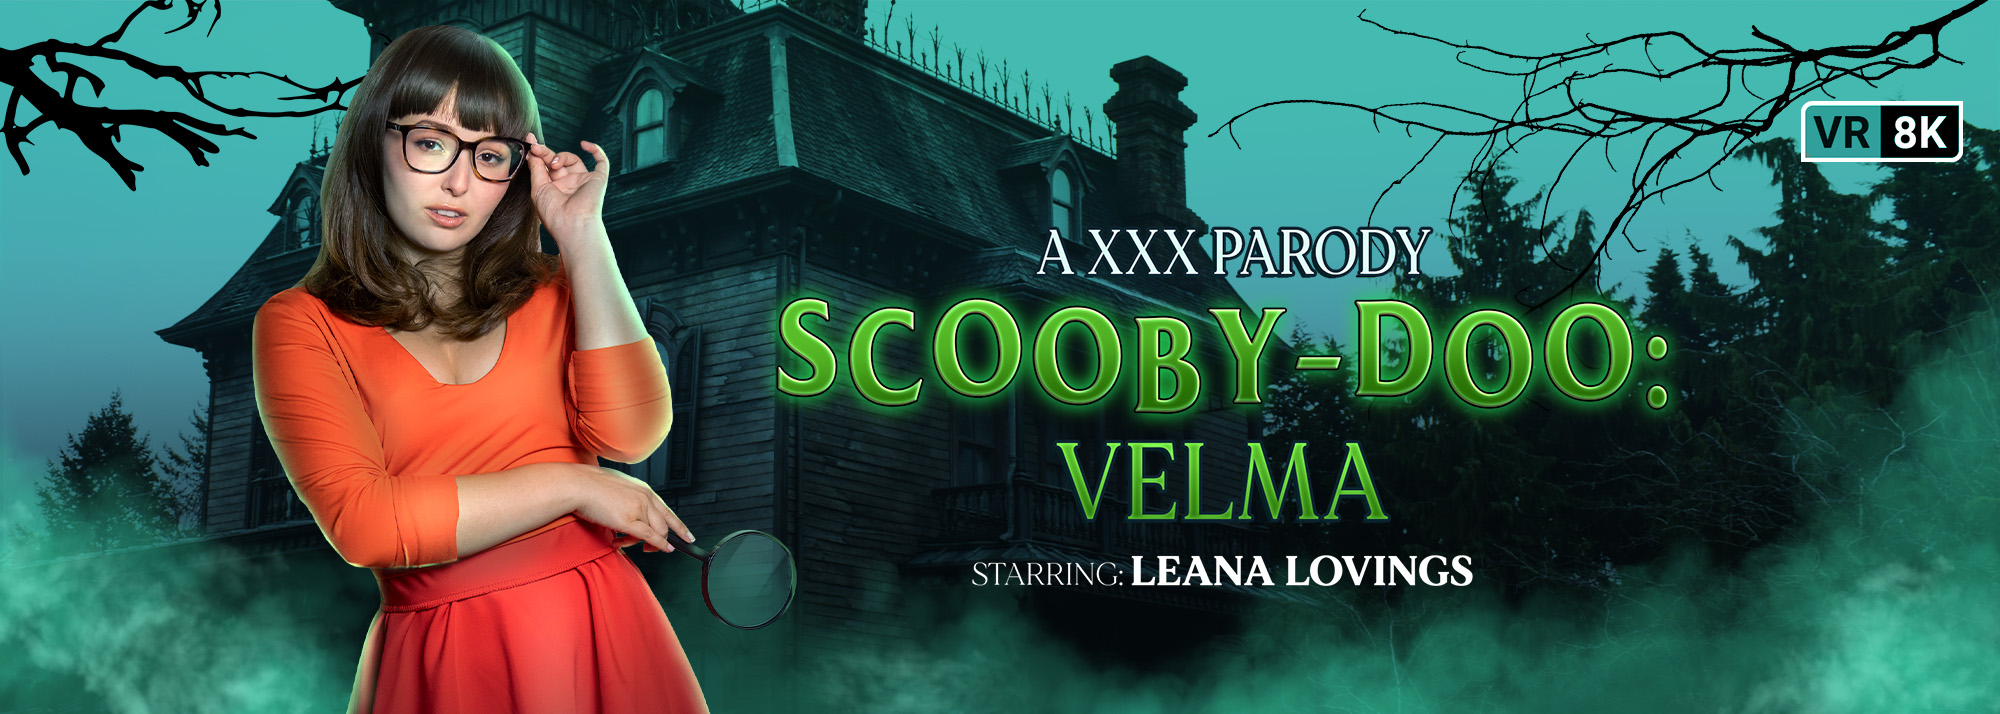 Scooby-Doo: Velma Porn Parody - VR Video, Starring: Leana Lovings